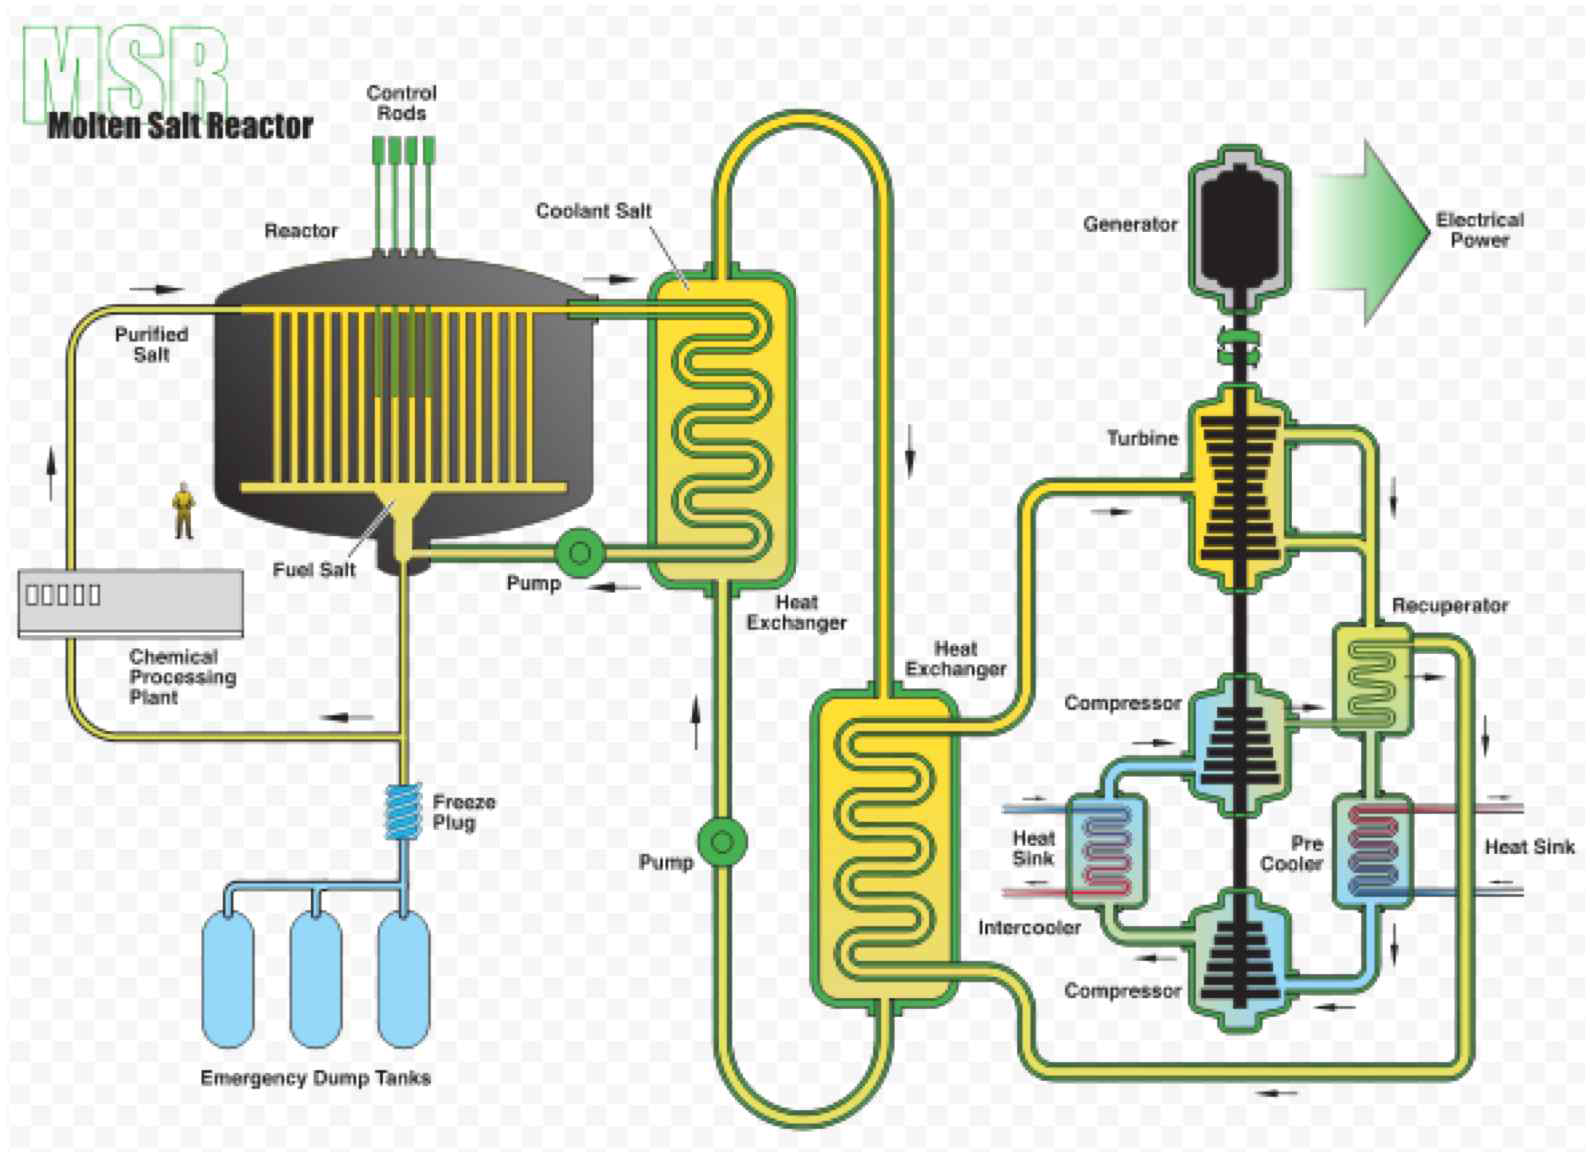 ORNL의 용융염 원자로 개념